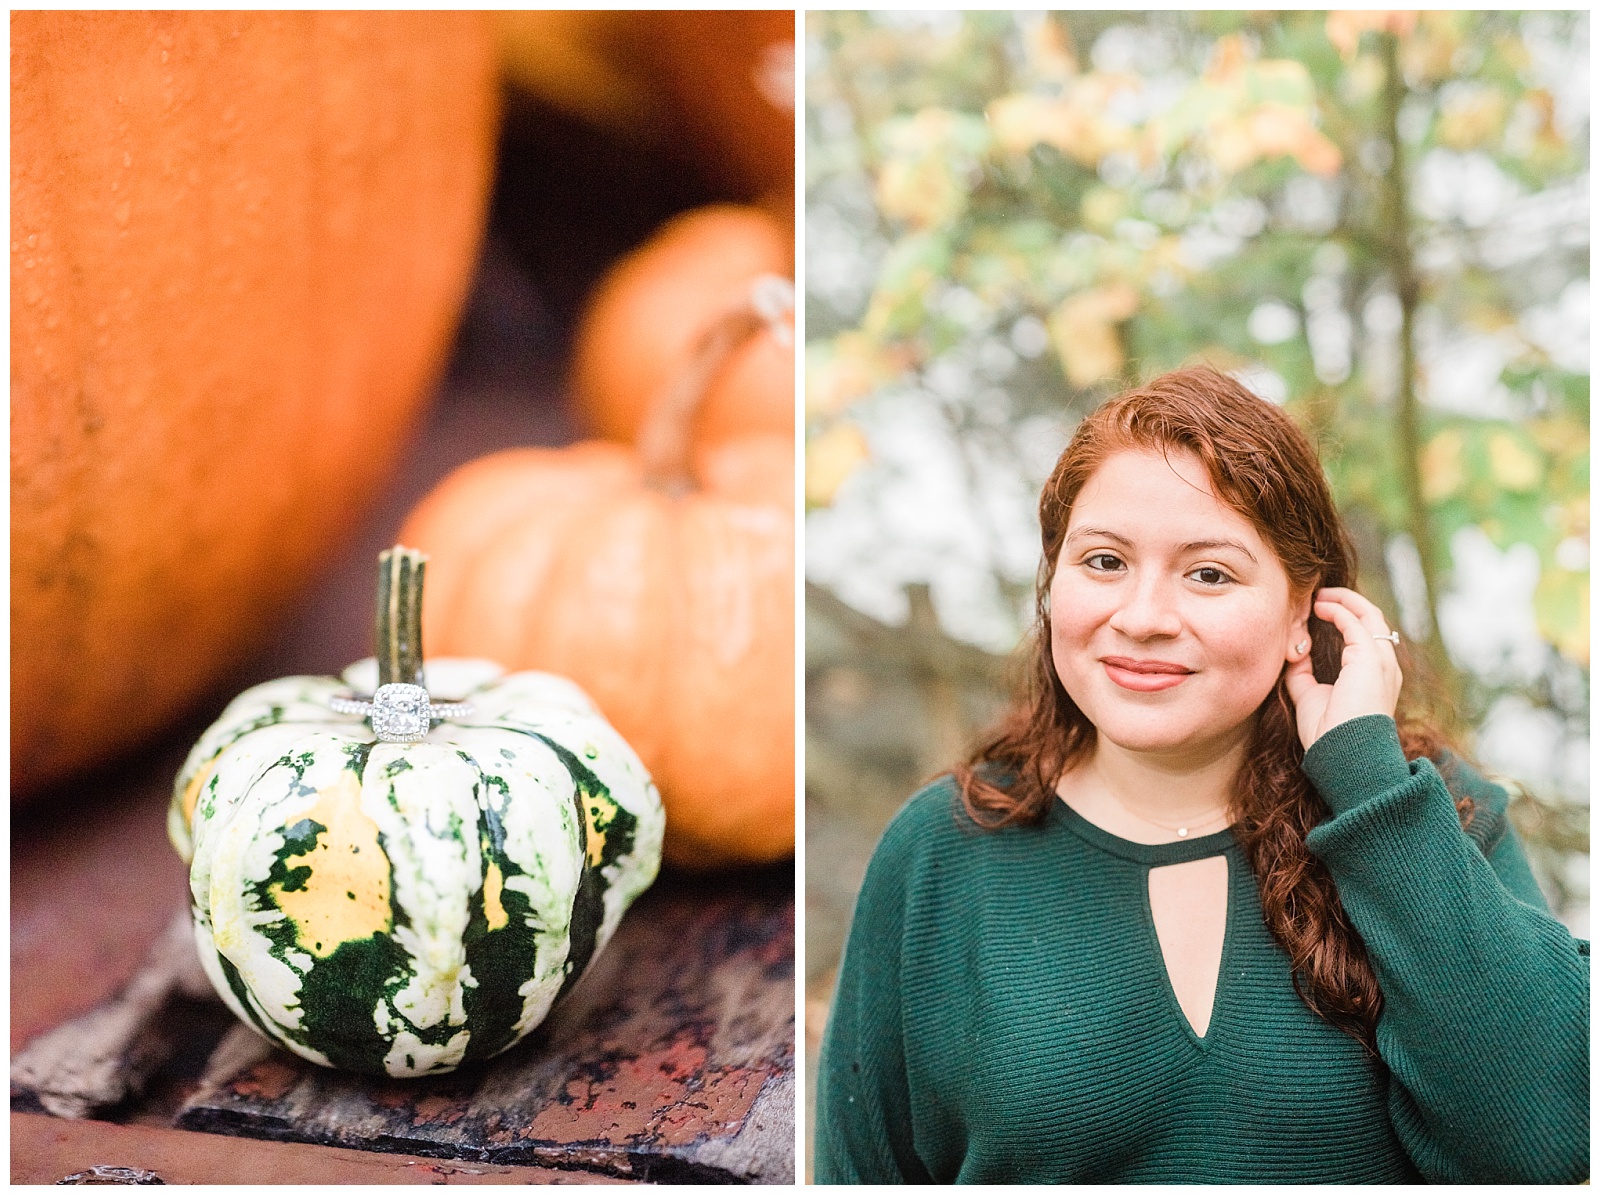 Autumn,Engagement Session,Fall,Mohonk Mountain House,NY,New Paltz,October,Pumpkin,Pumpkin Patch,Wedding Photographer,